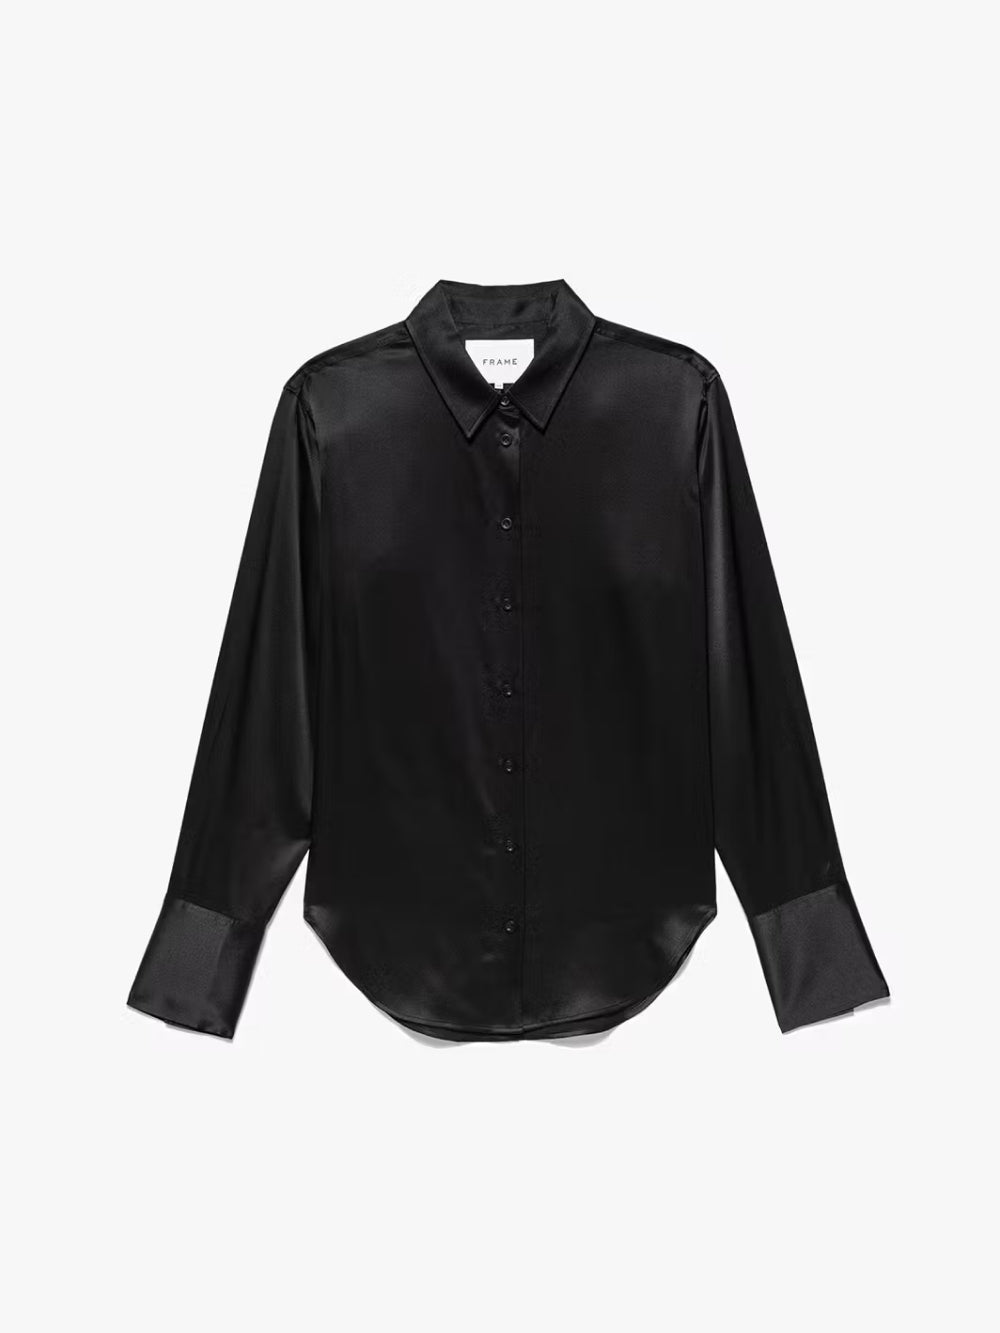 The – Standard in FRAME Noir Shirt